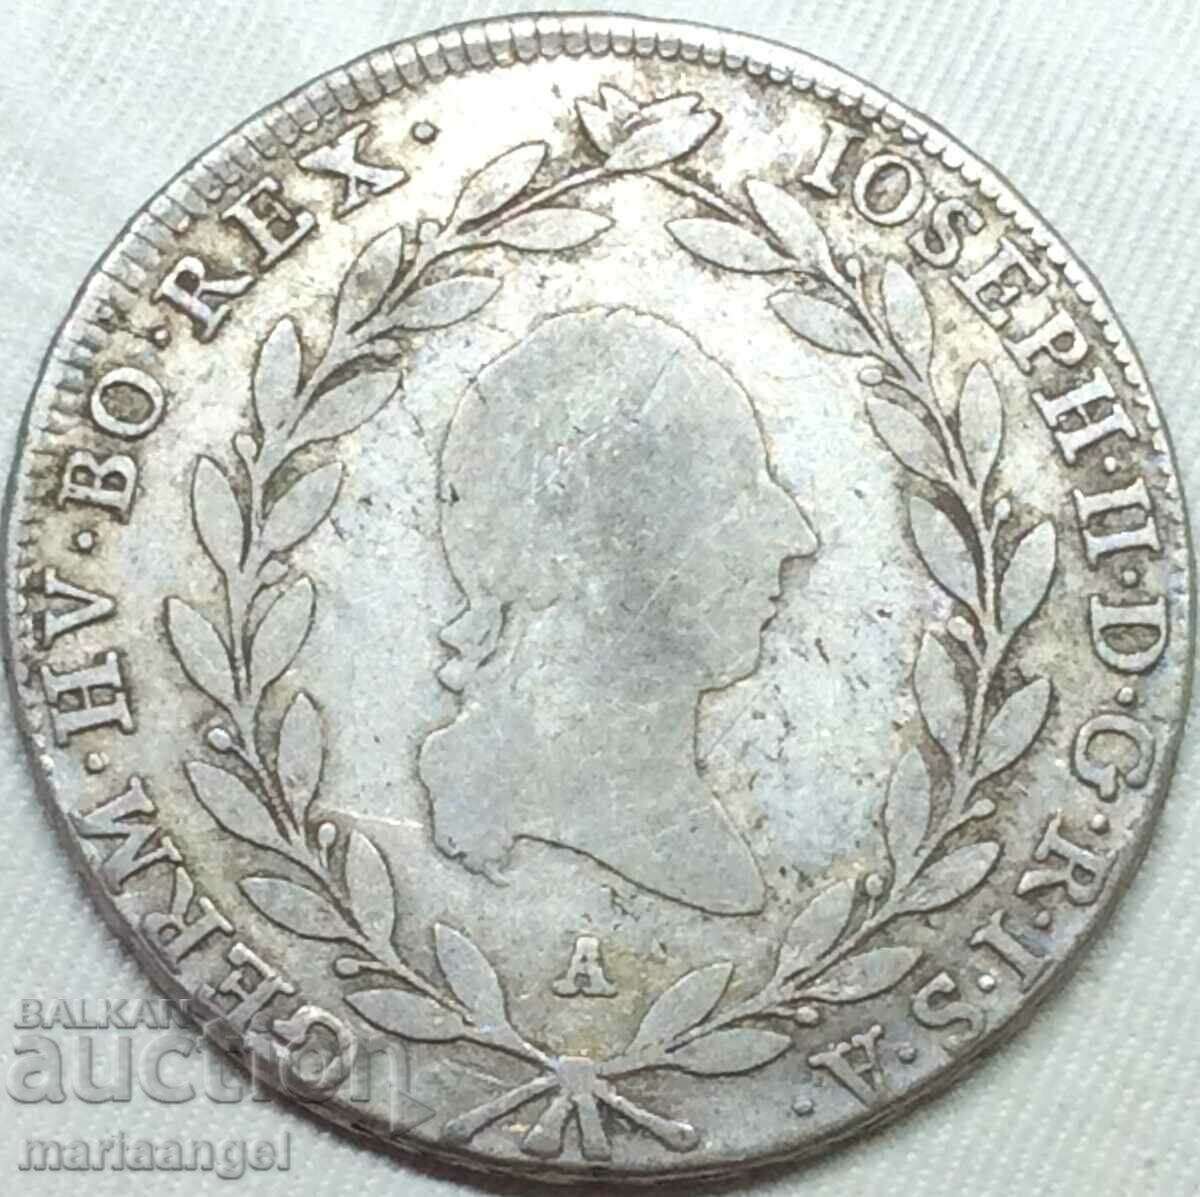 20 Kreuzers 1785 Austria A - Vienna Joseph II 29mm silver